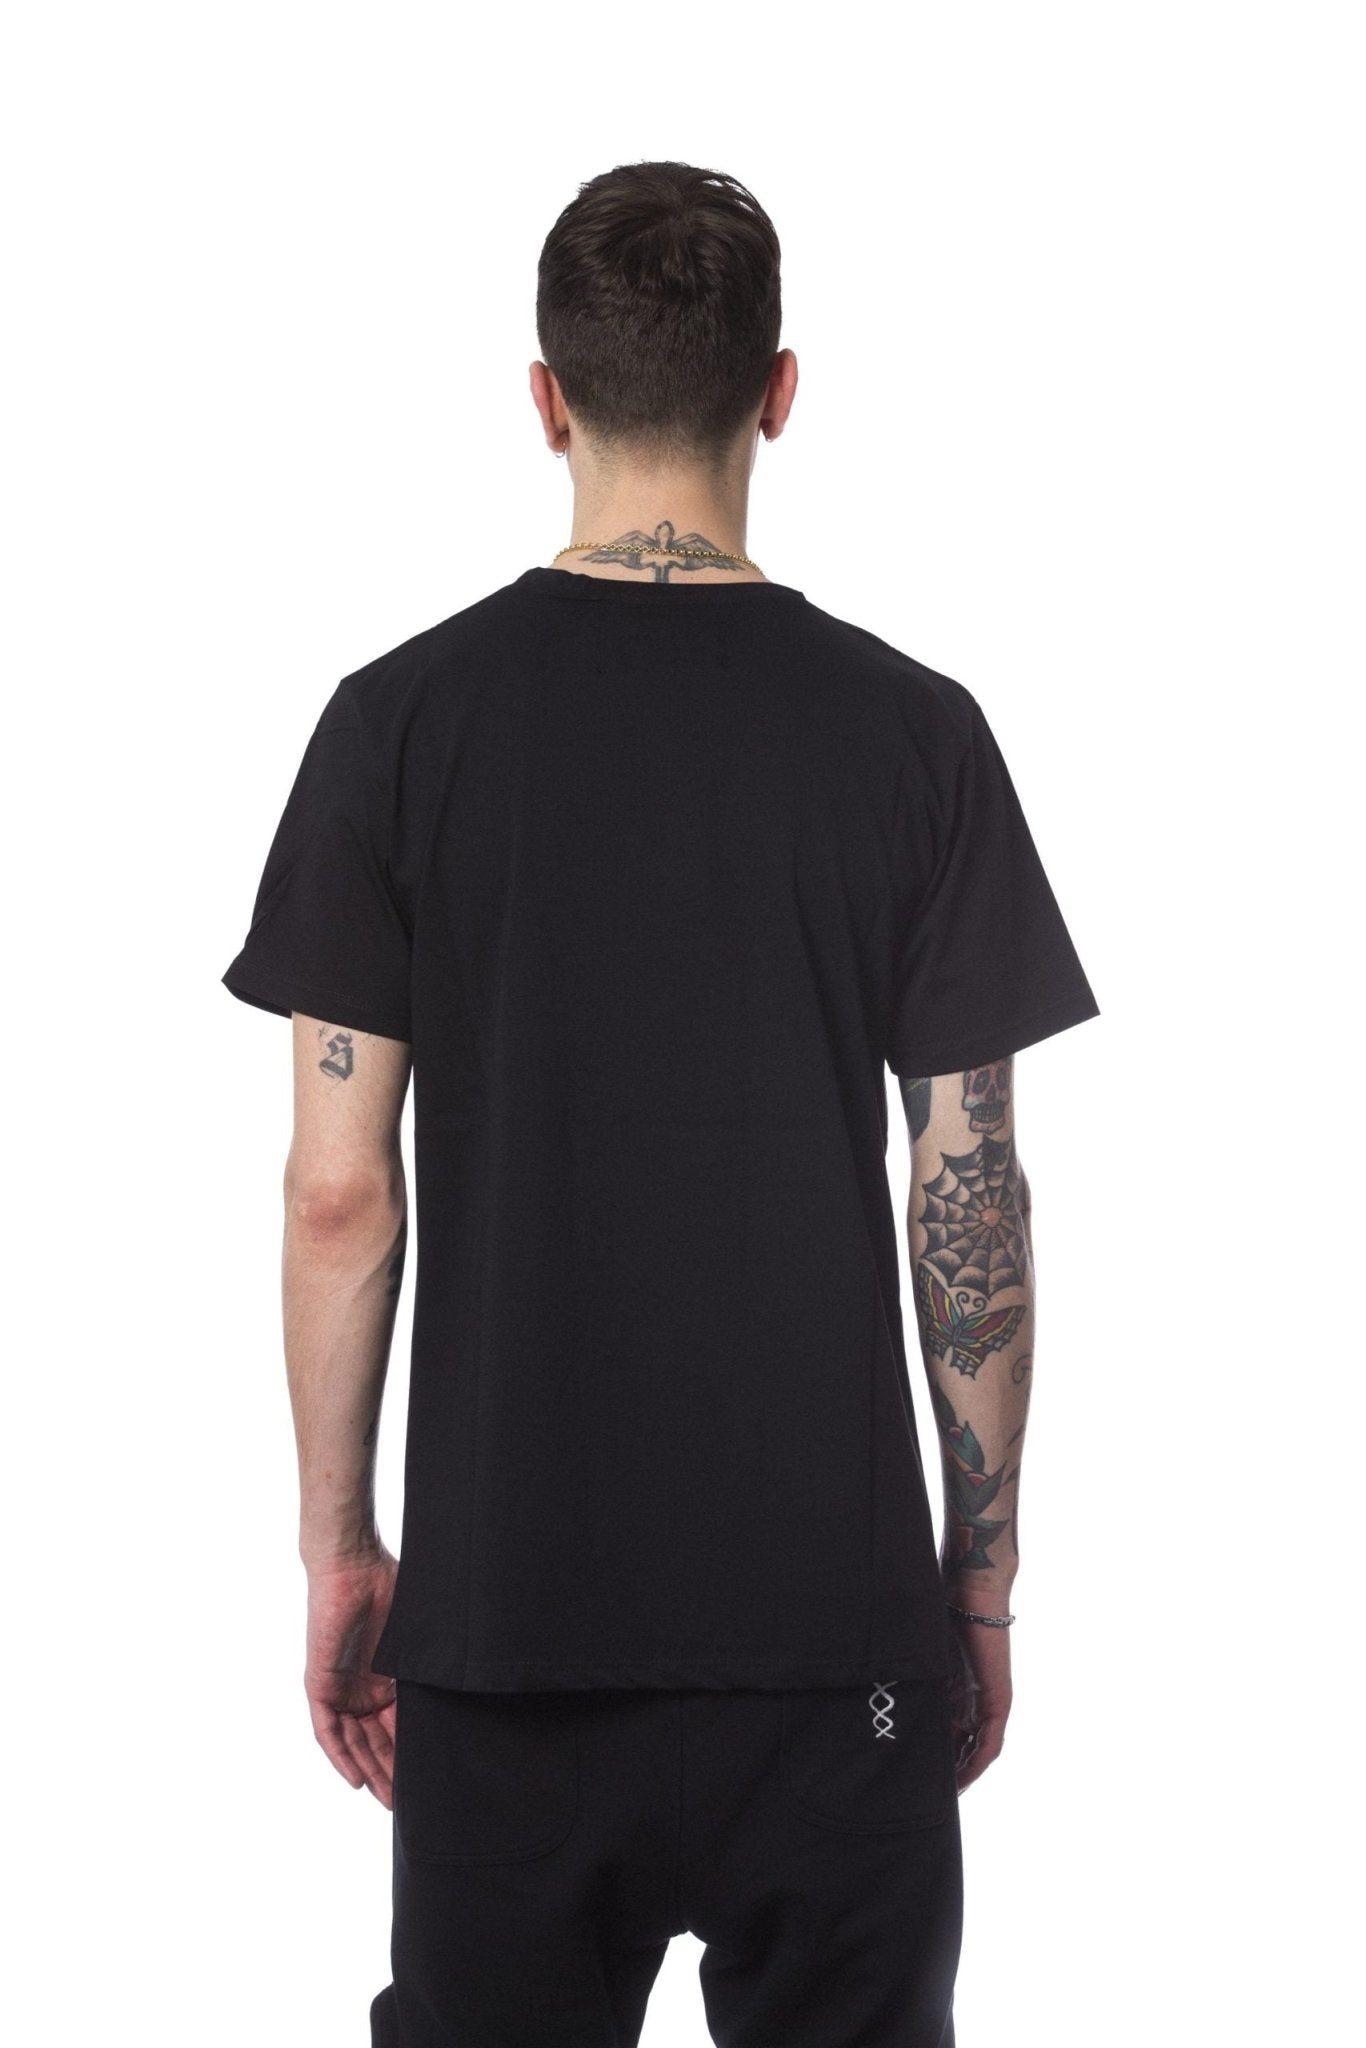 Nicolo Tonetto Black Cotton T-Shirt - Fizigo